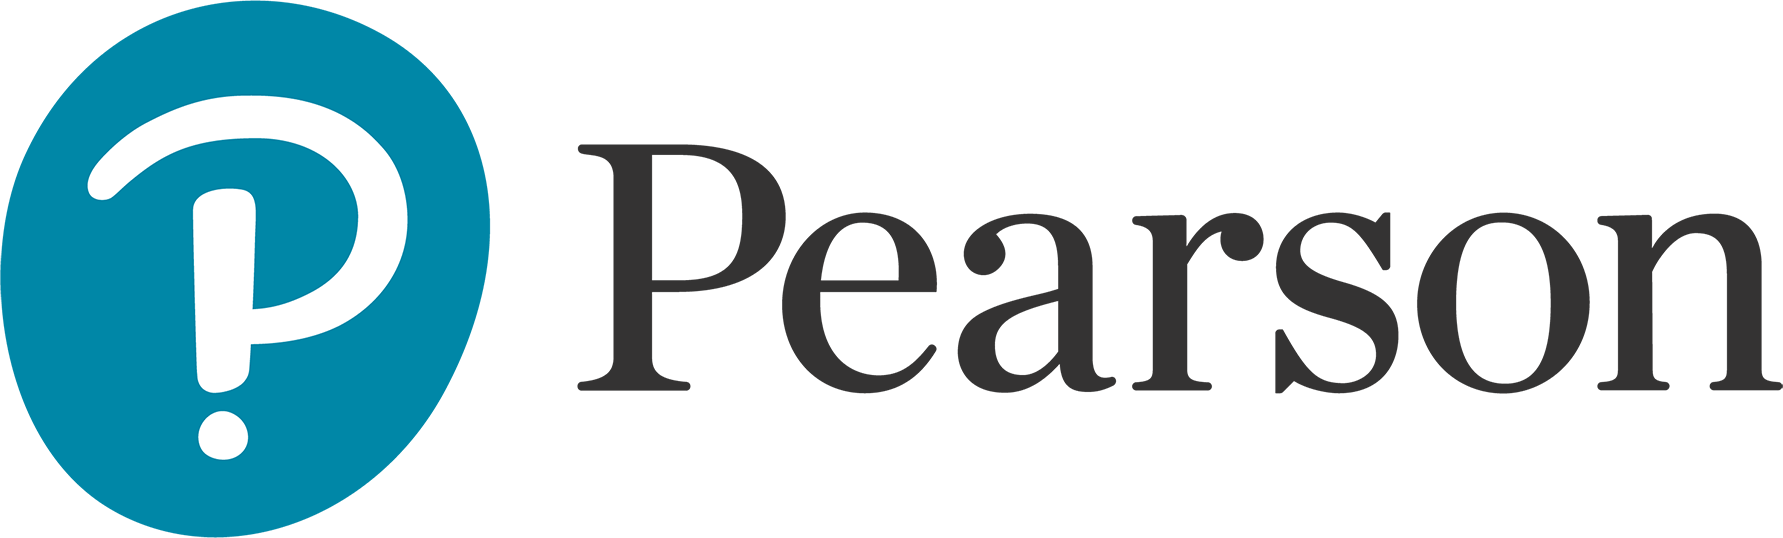 Pearson-Logo-.png